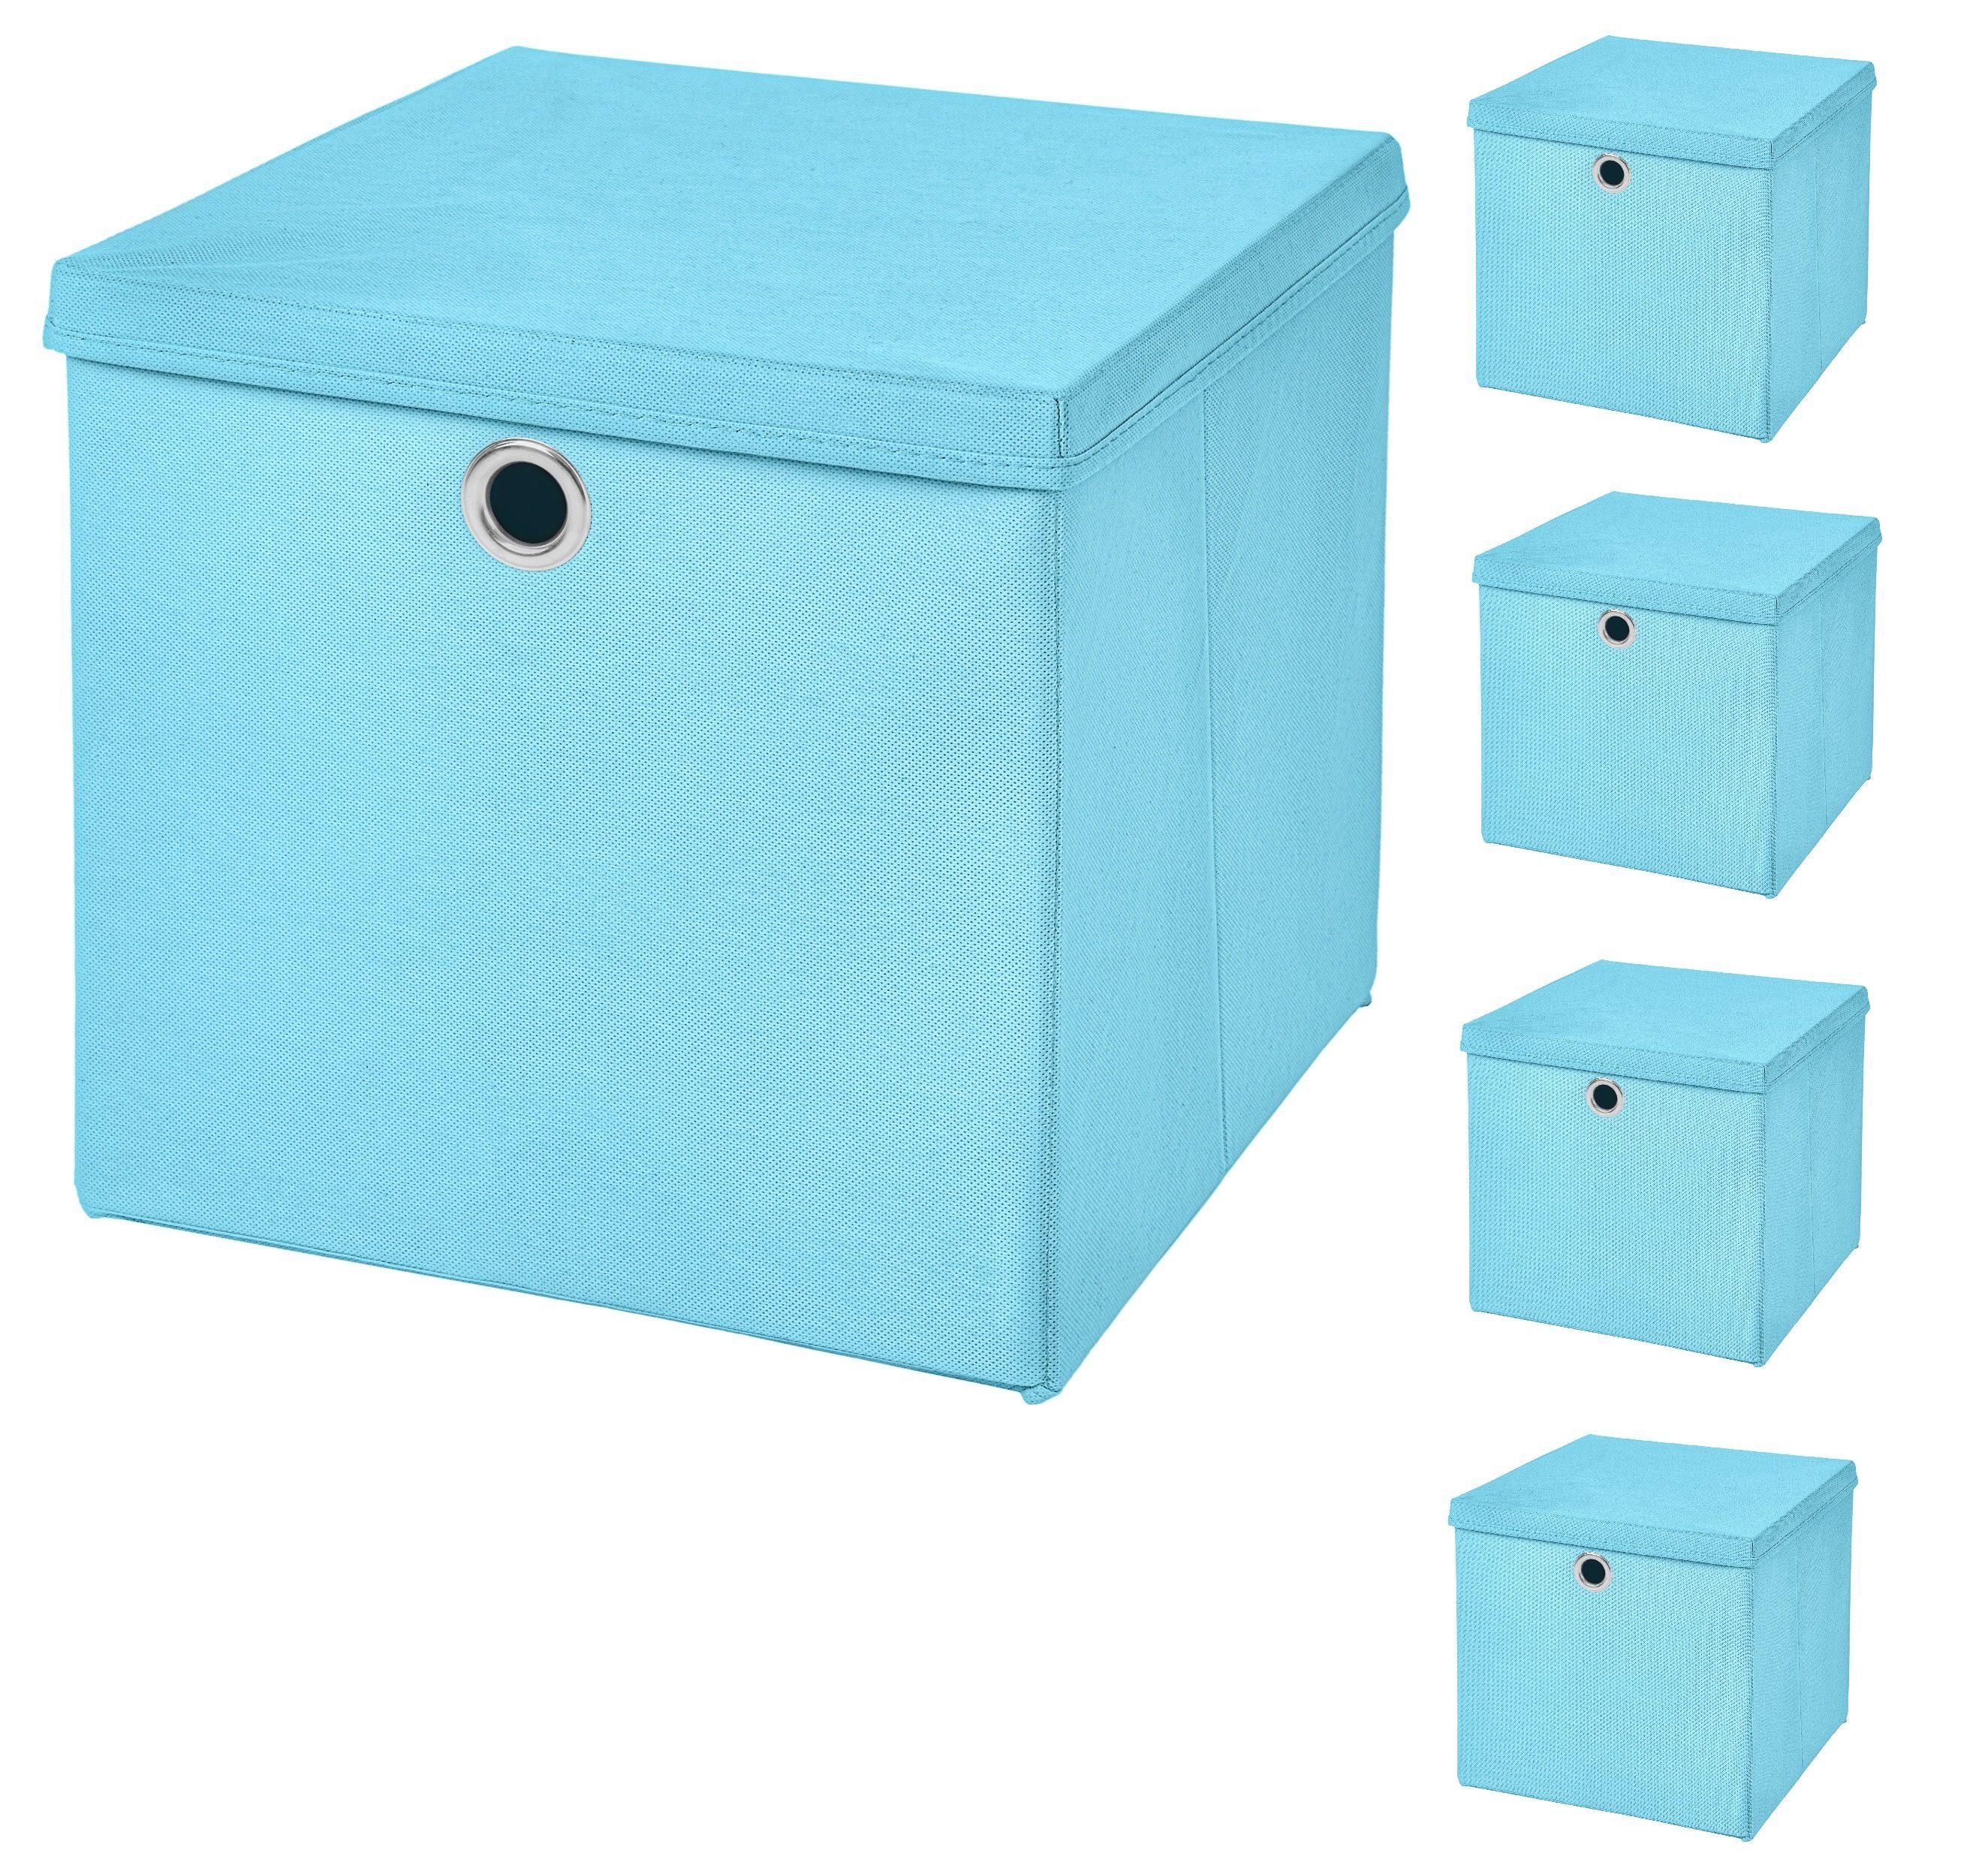 StickandShine Faltbox 5 Stück Faltboxen 28 x 28 x 28 cm faltbar